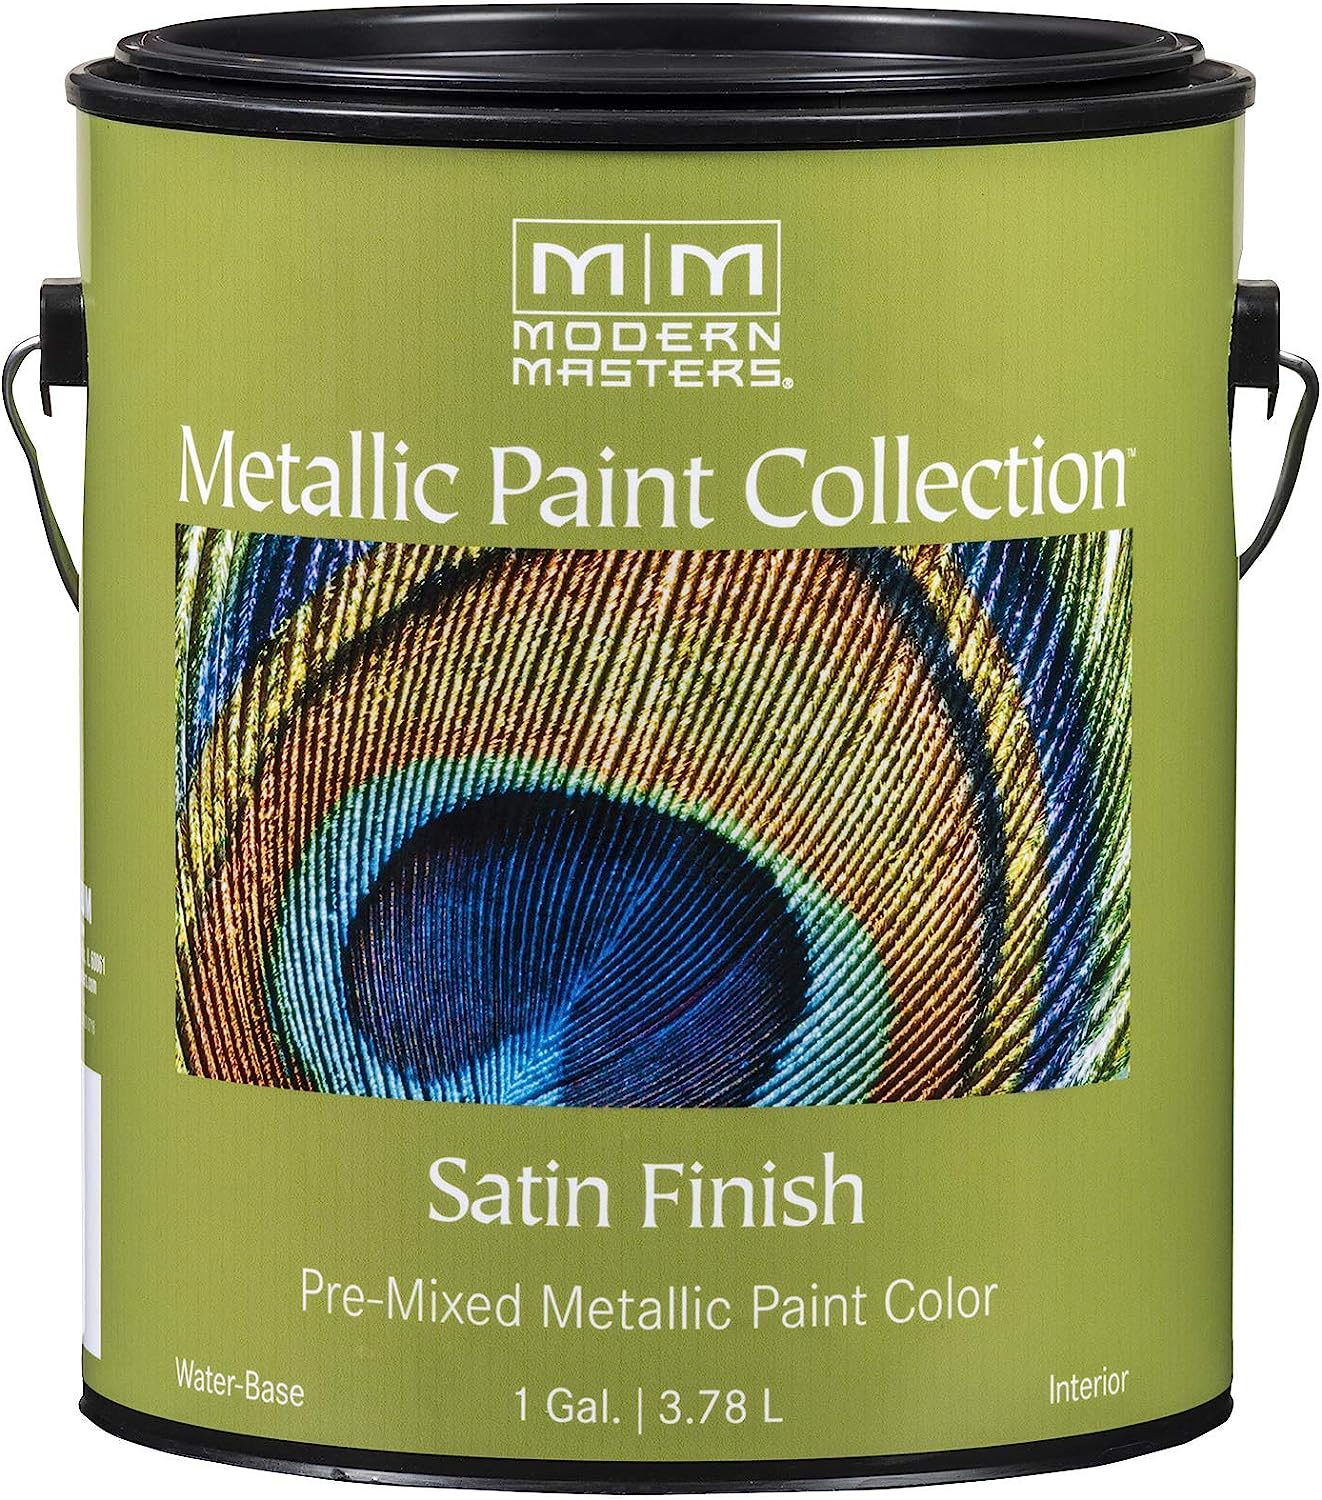 Modern Masters 1 gal ME196 Pearl White Metallic Paint [...]